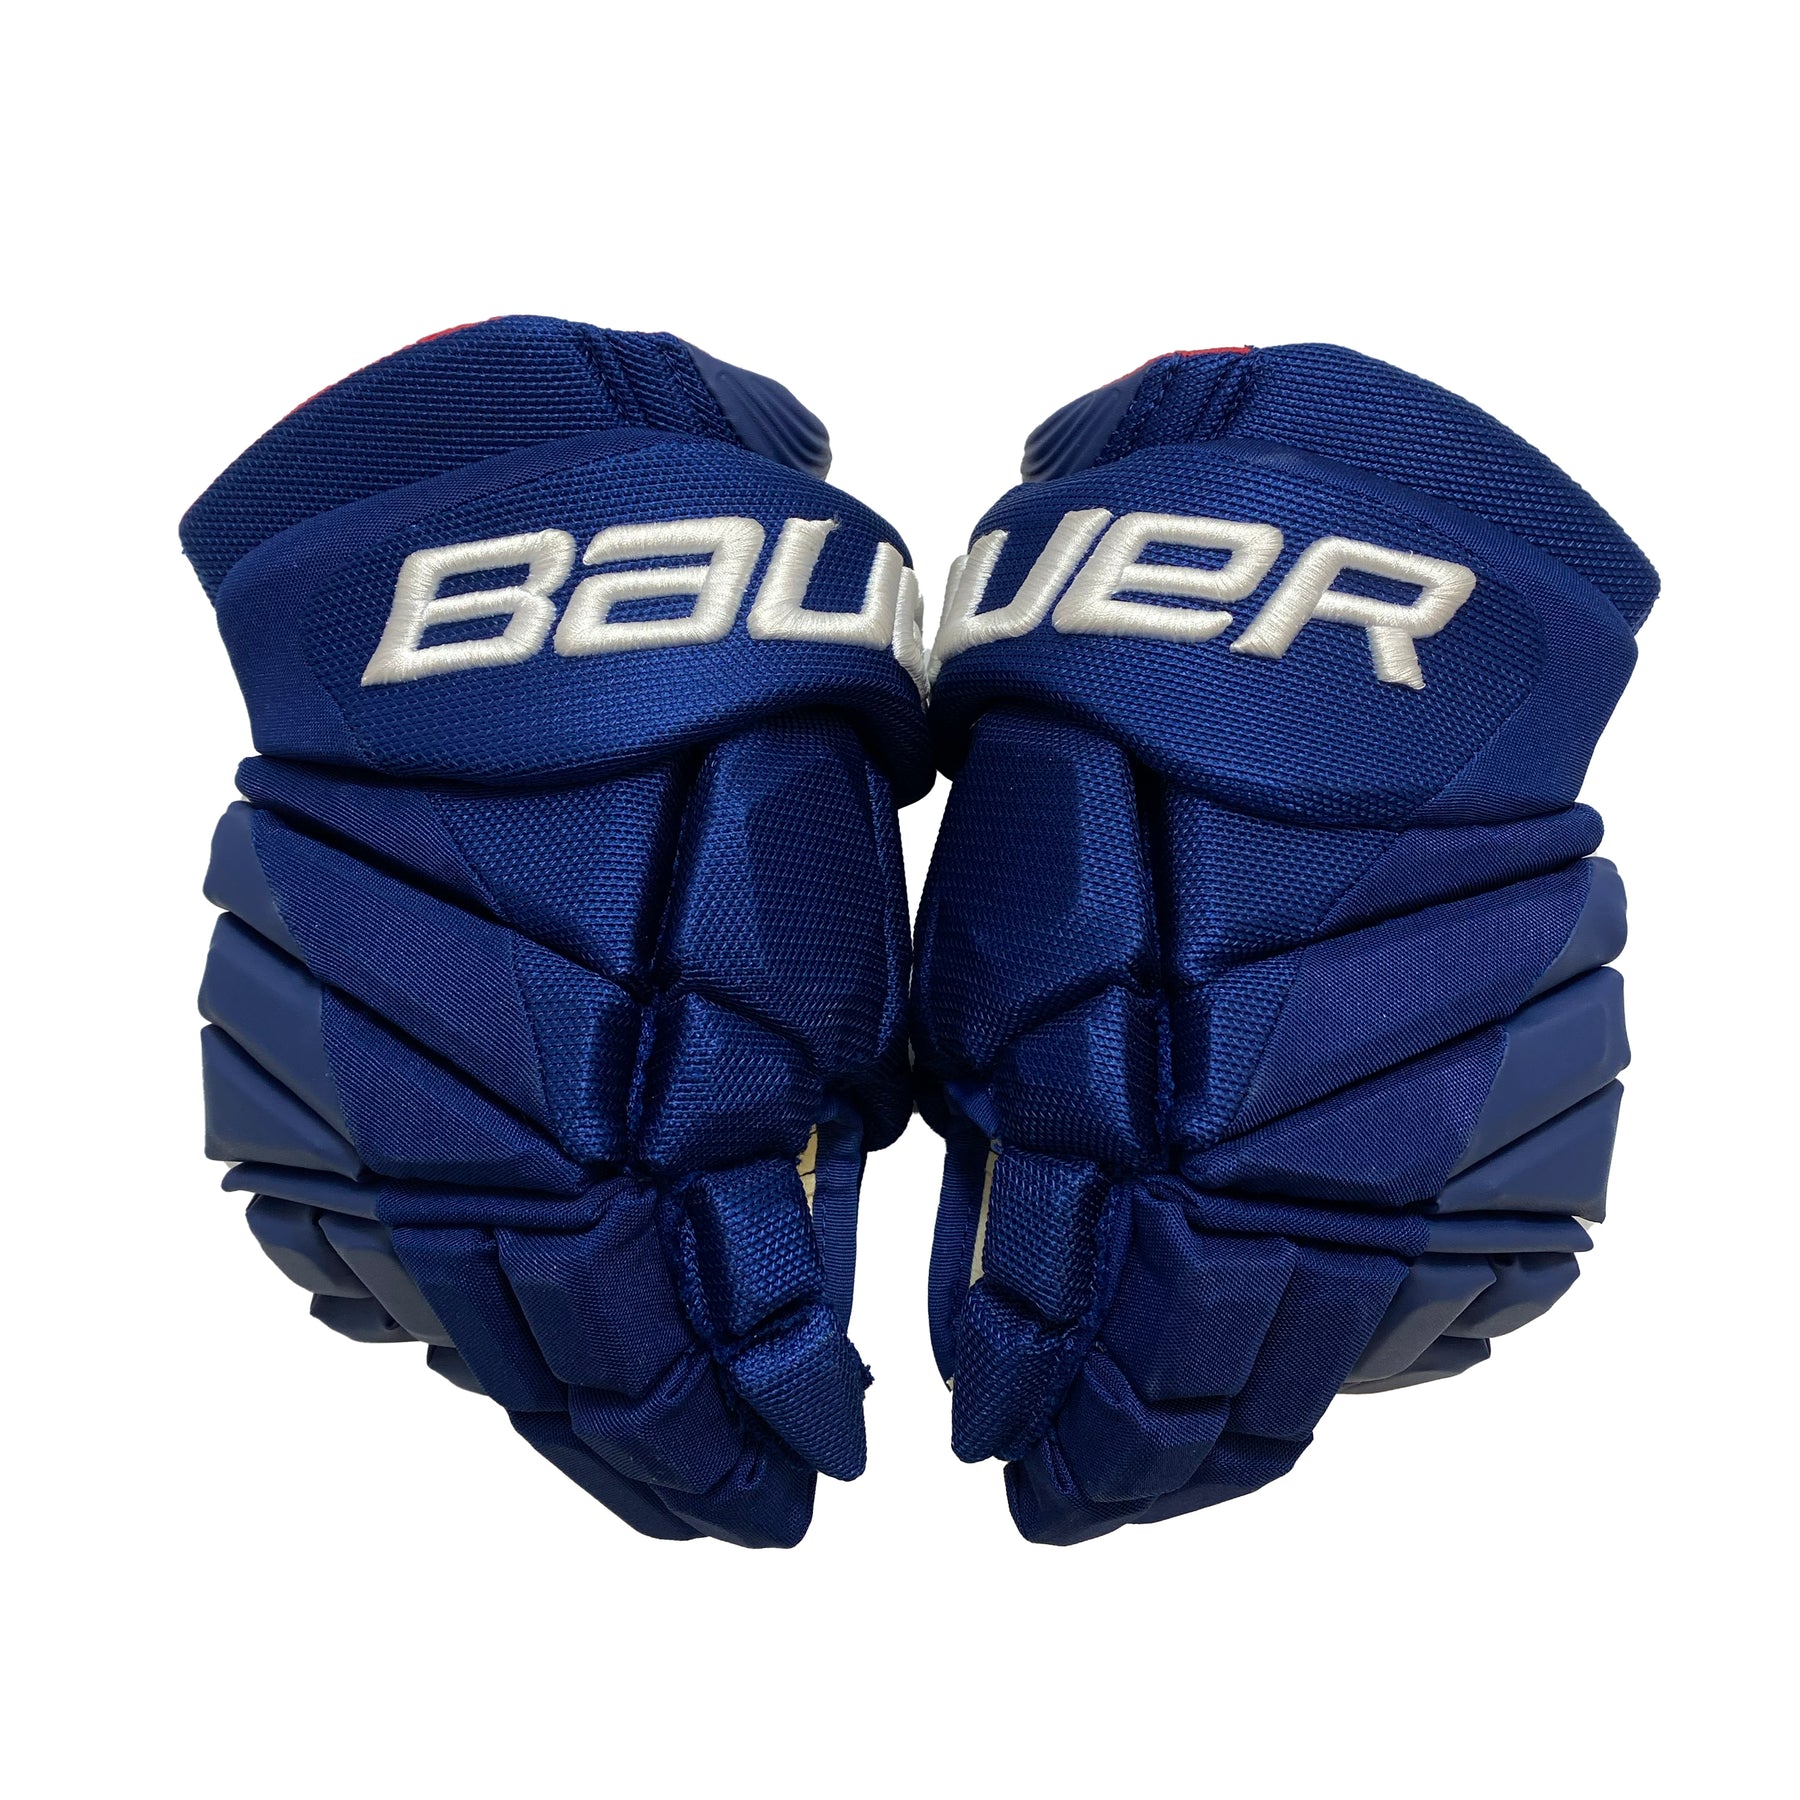 Bauer Vapor 1X Pro - Vancouver Canucks - Pro Stock Gloves - Nikita Tryamkin